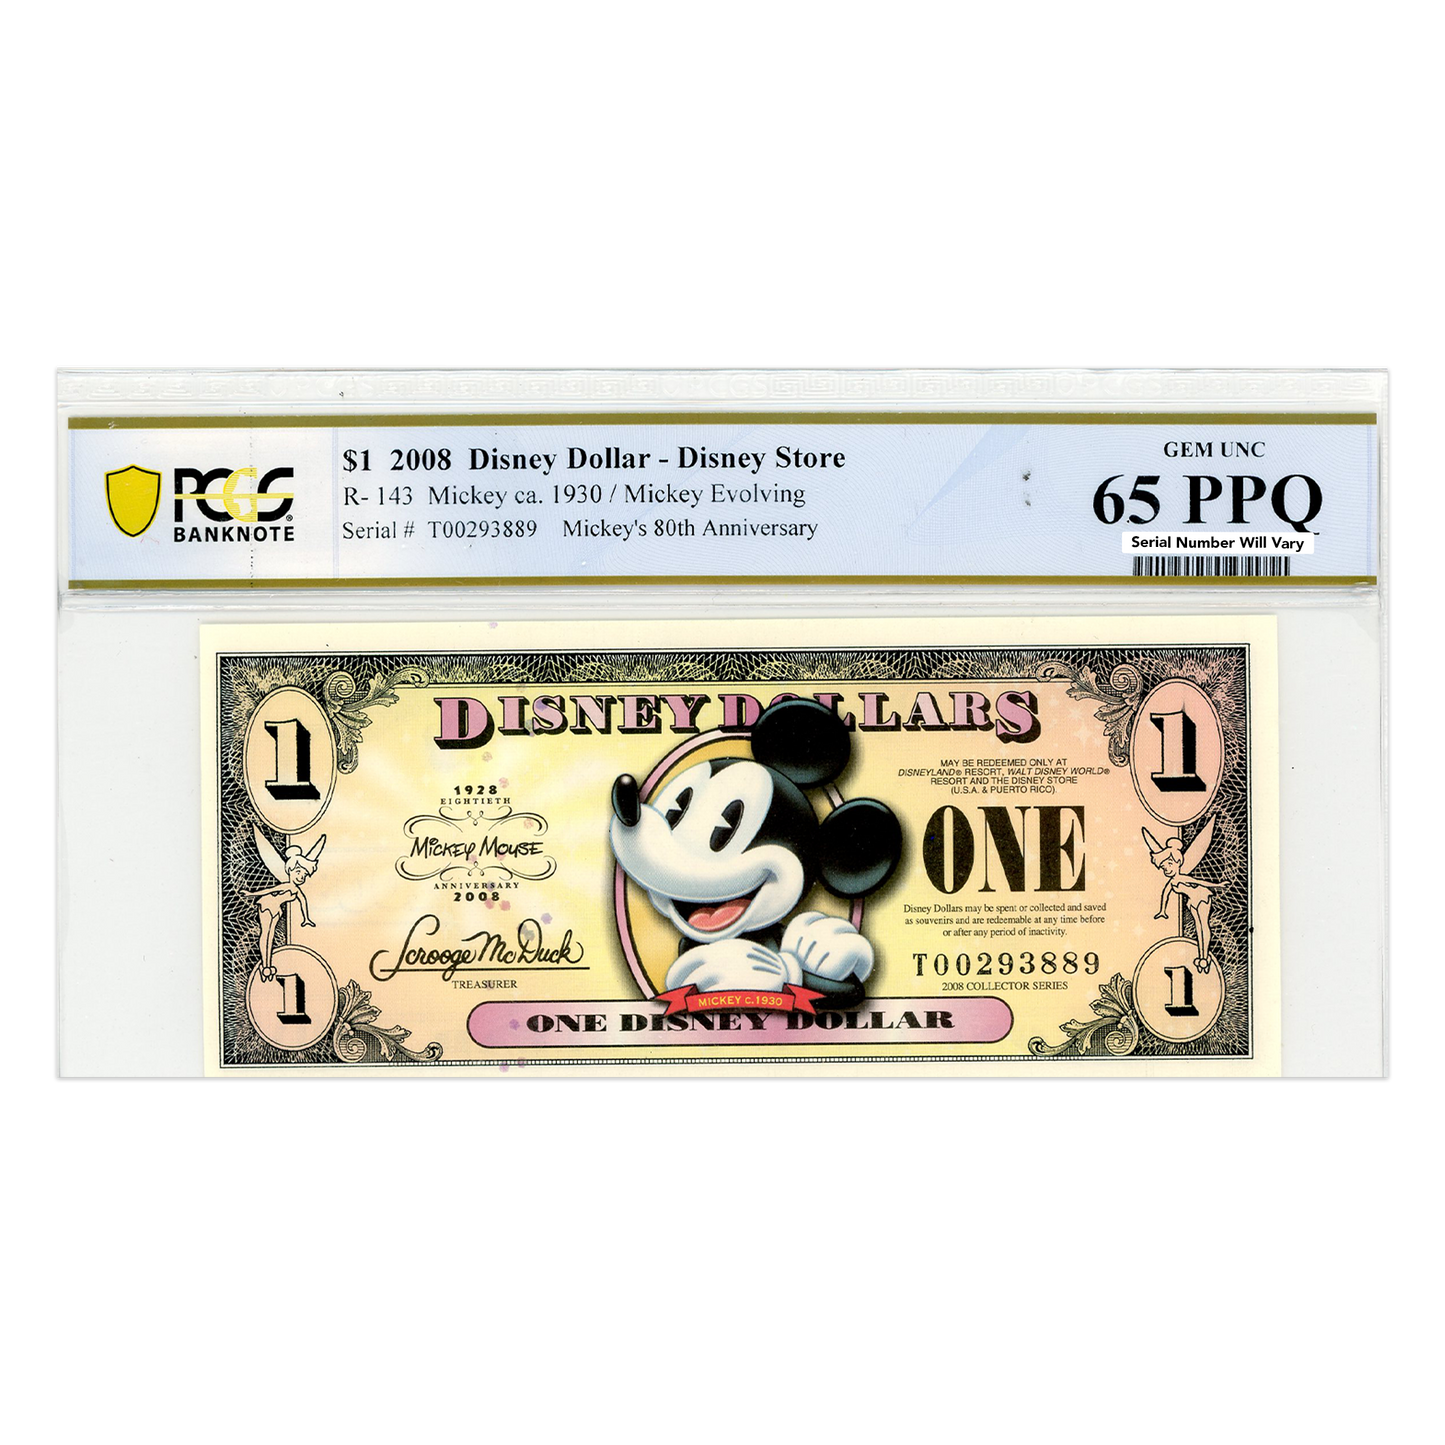 2008 Disney Dollar - Mickey ca. 1930/ Mickey Evolving - PCGS 65 PPQ GEM UNC